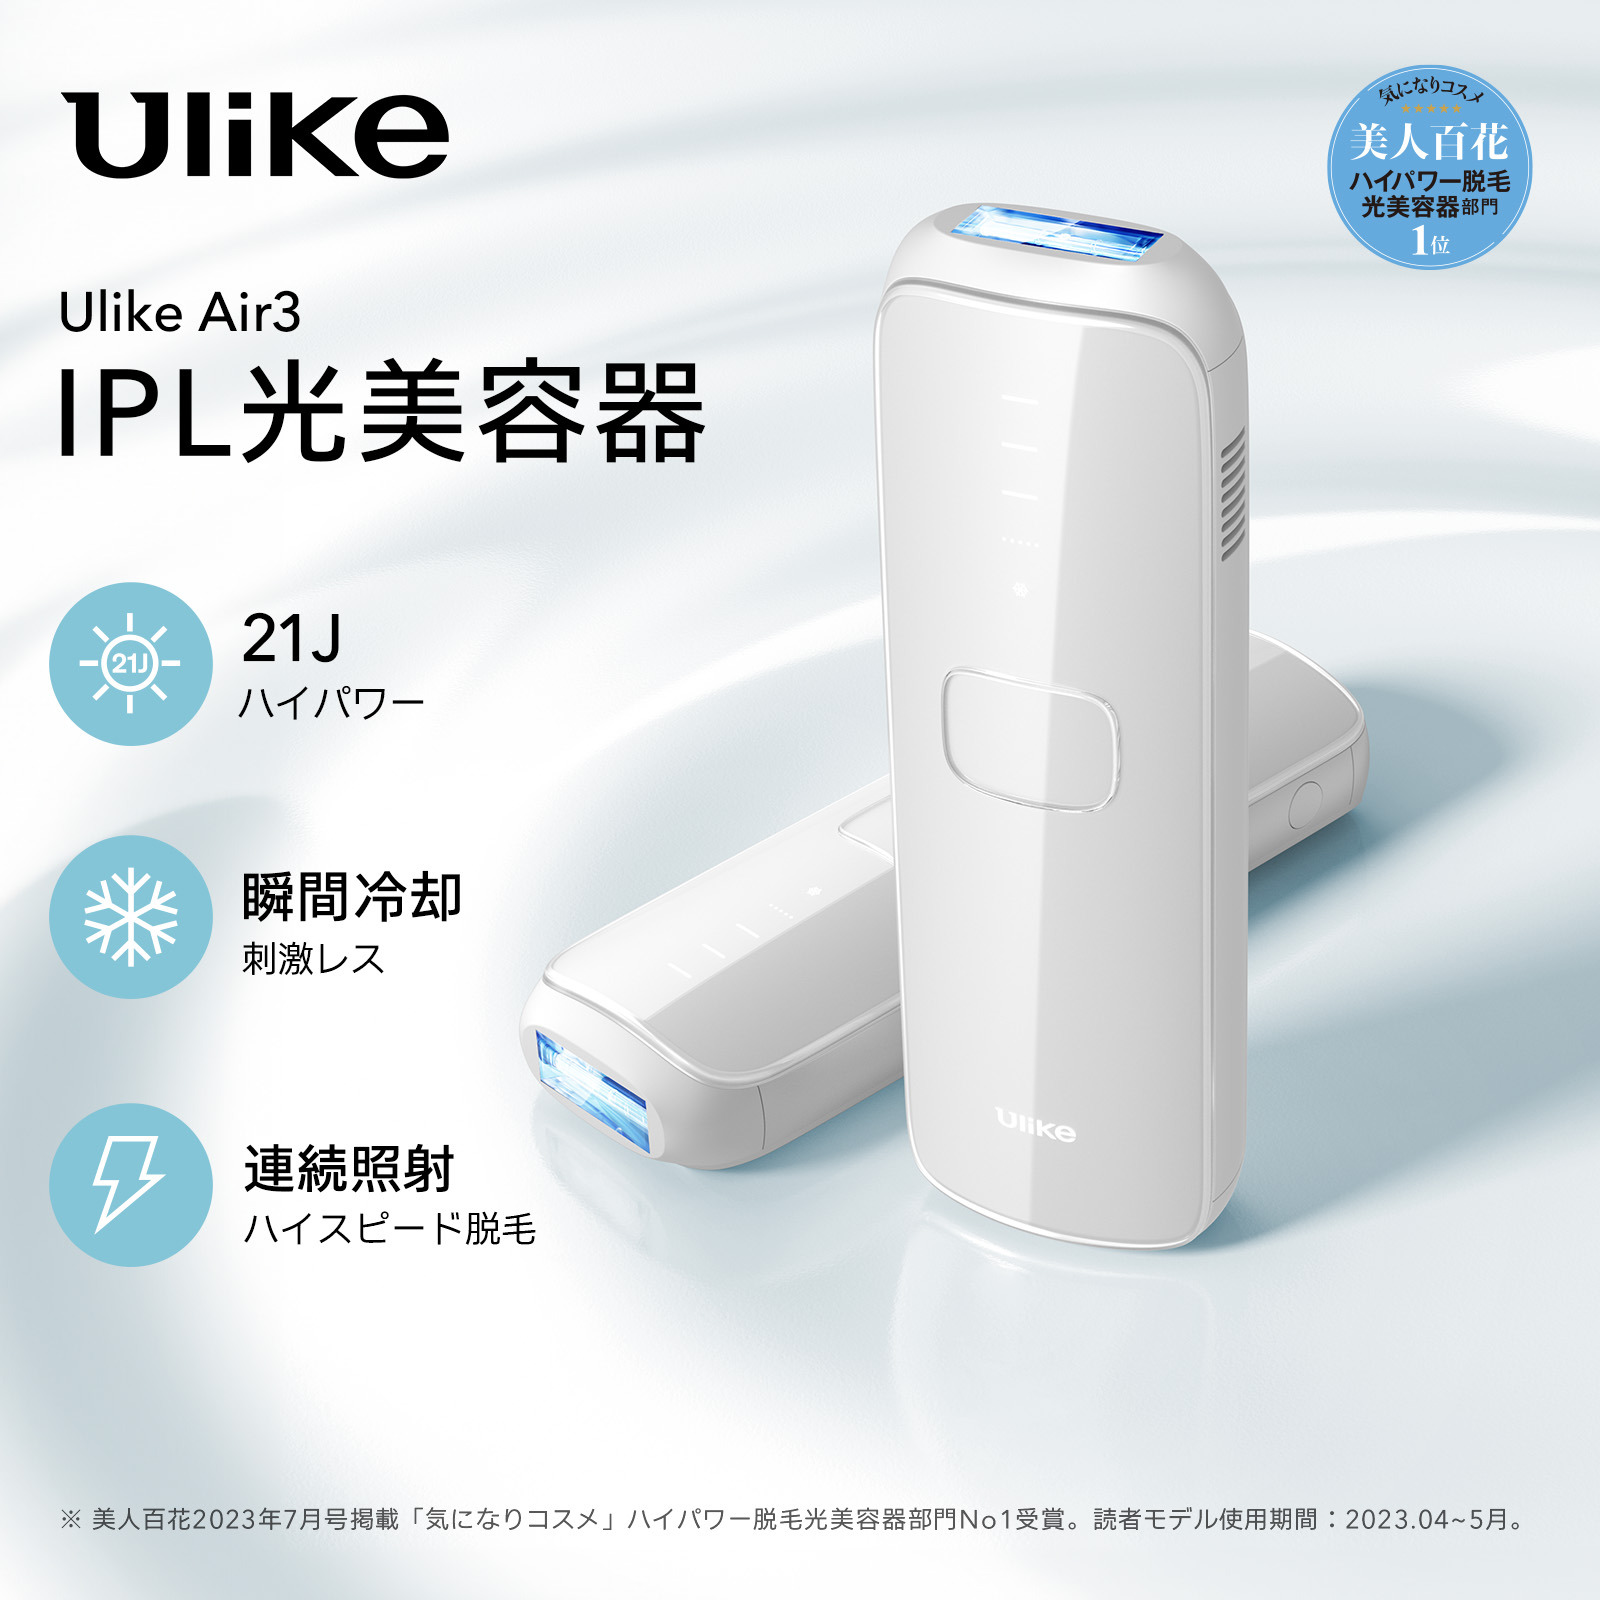 Ulike Air3 IPL光美容器 ※ジェルセットカラーピンク